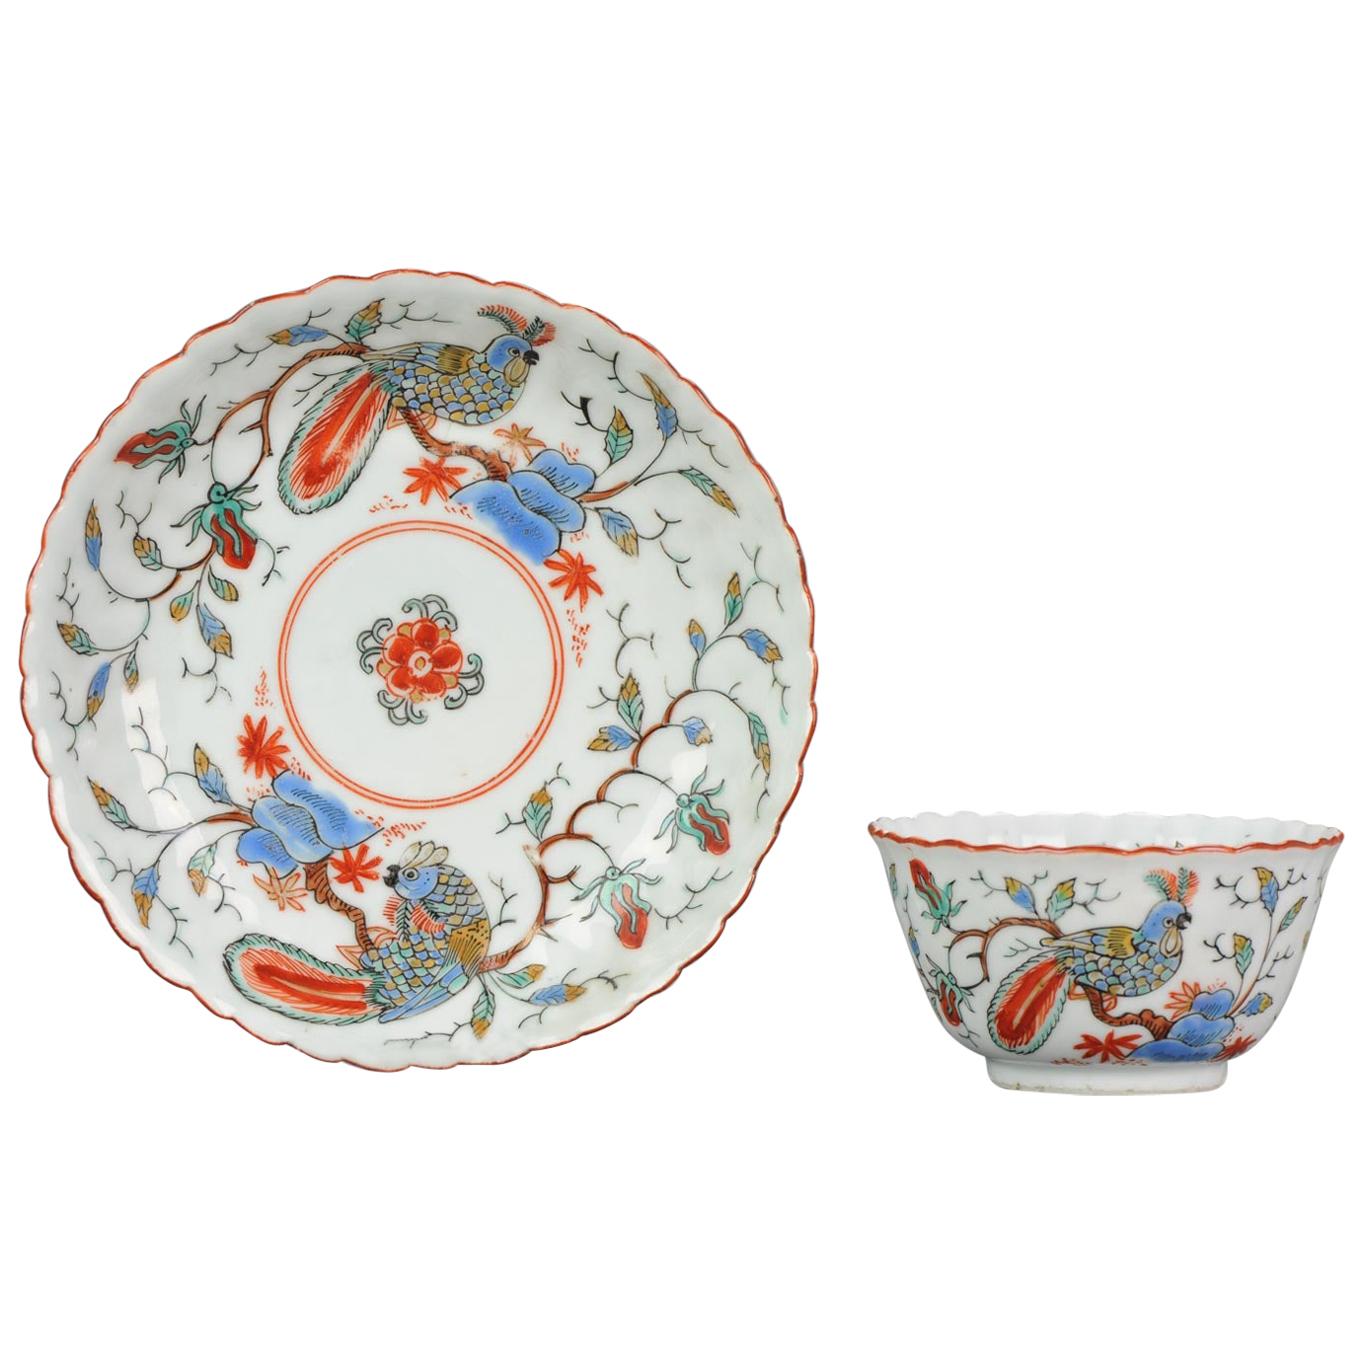 Antique Rare Kangxi Period Chinese Porcelain Dish Amsterdam Bont Parrot For Sale